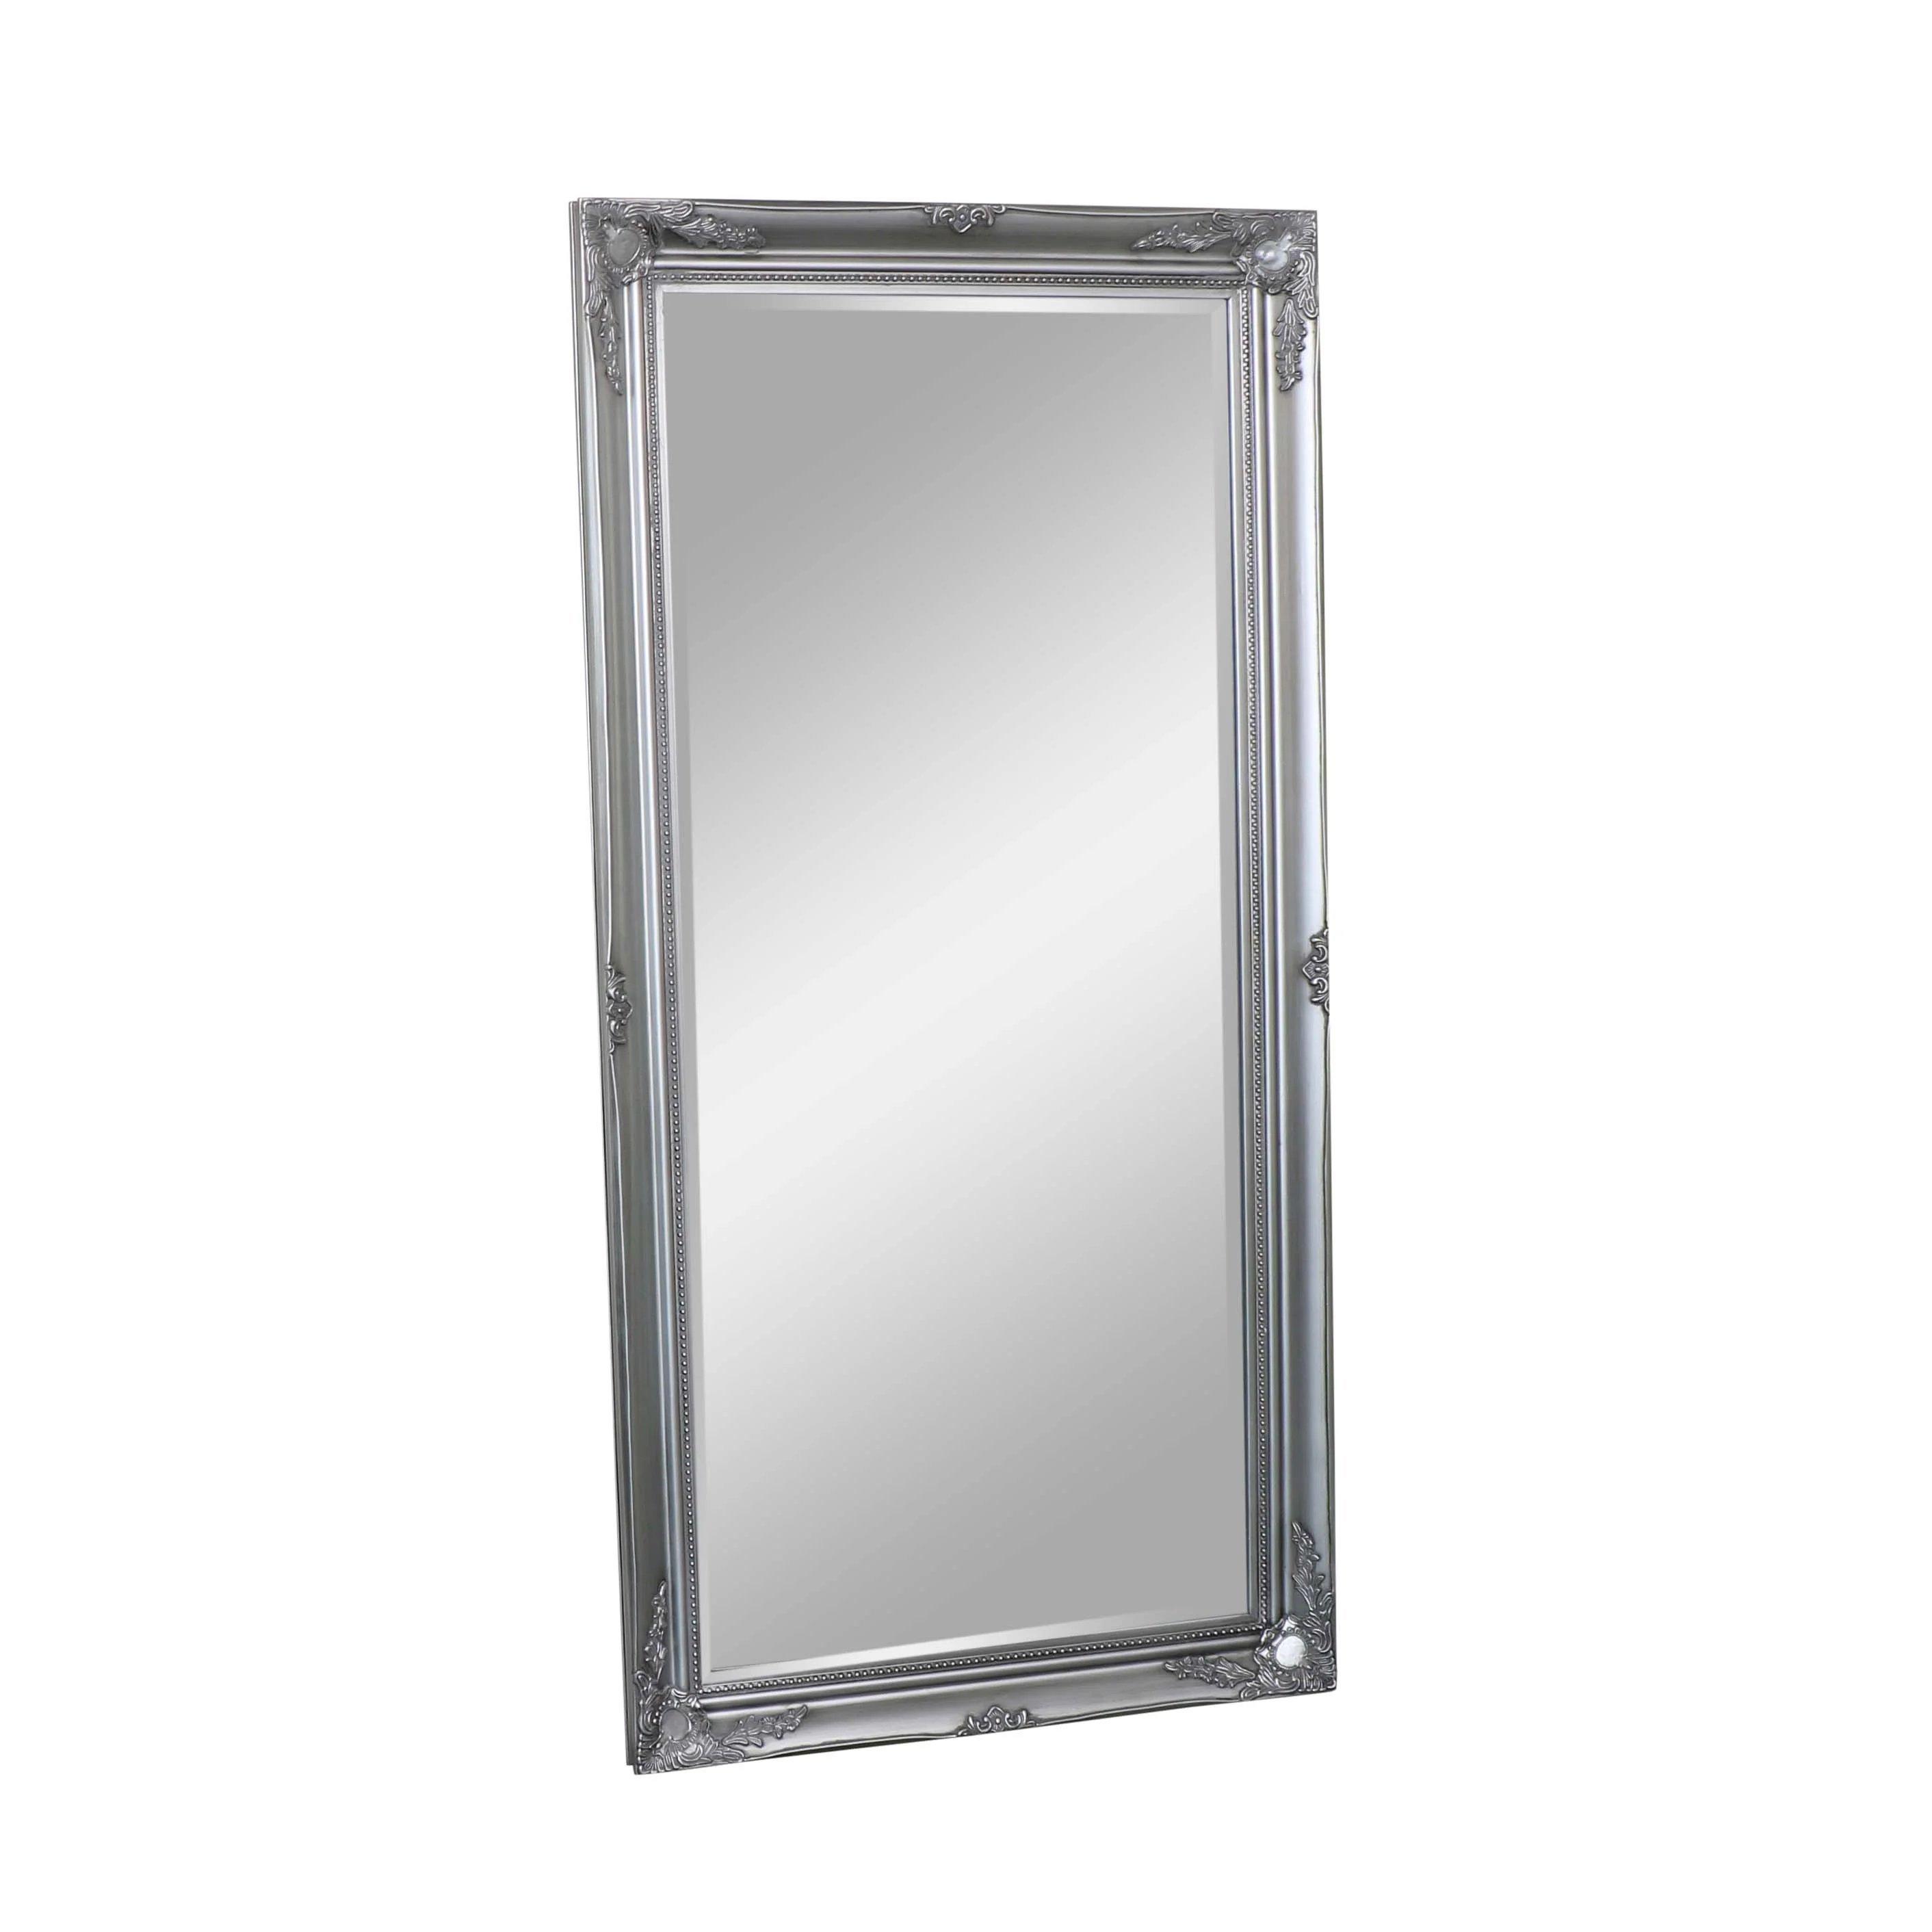 Large Ornate Silver Wall / Floor / Leaner Mirror 158cm X 78cm